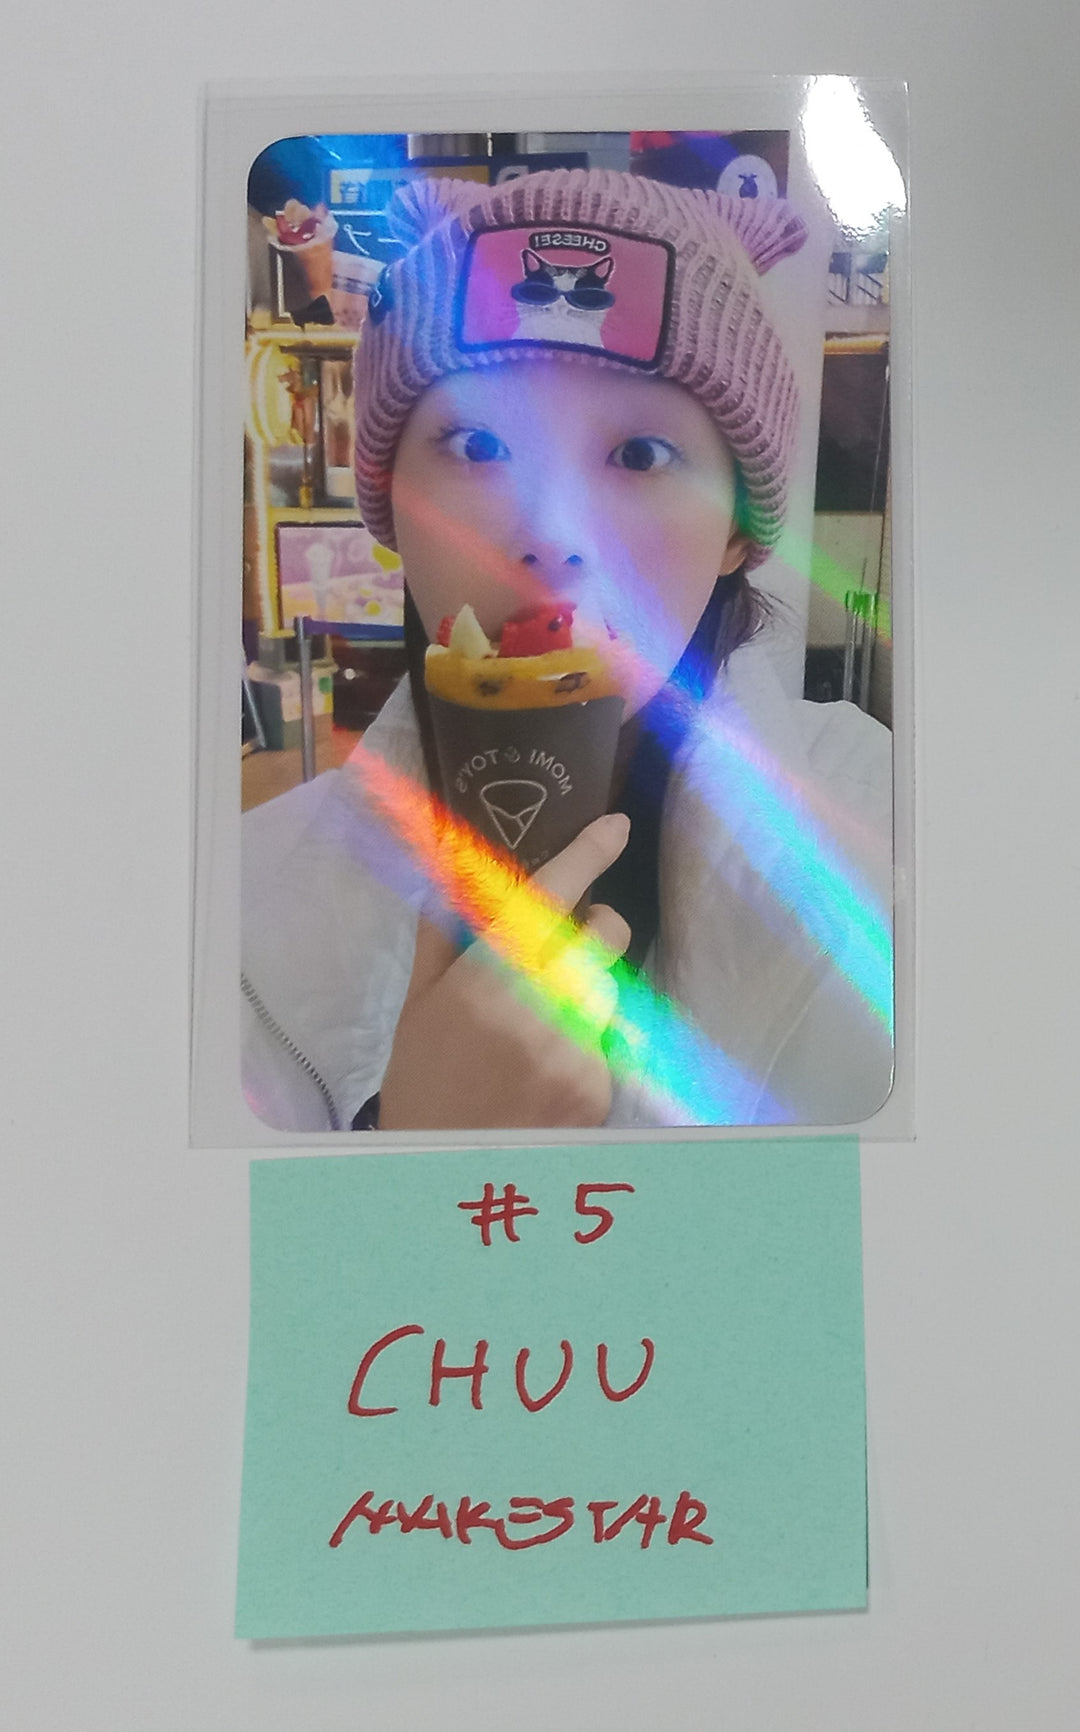 CHUU "Howl" - Makestar Fansign Event Photocard Round 8 [24.2.5]